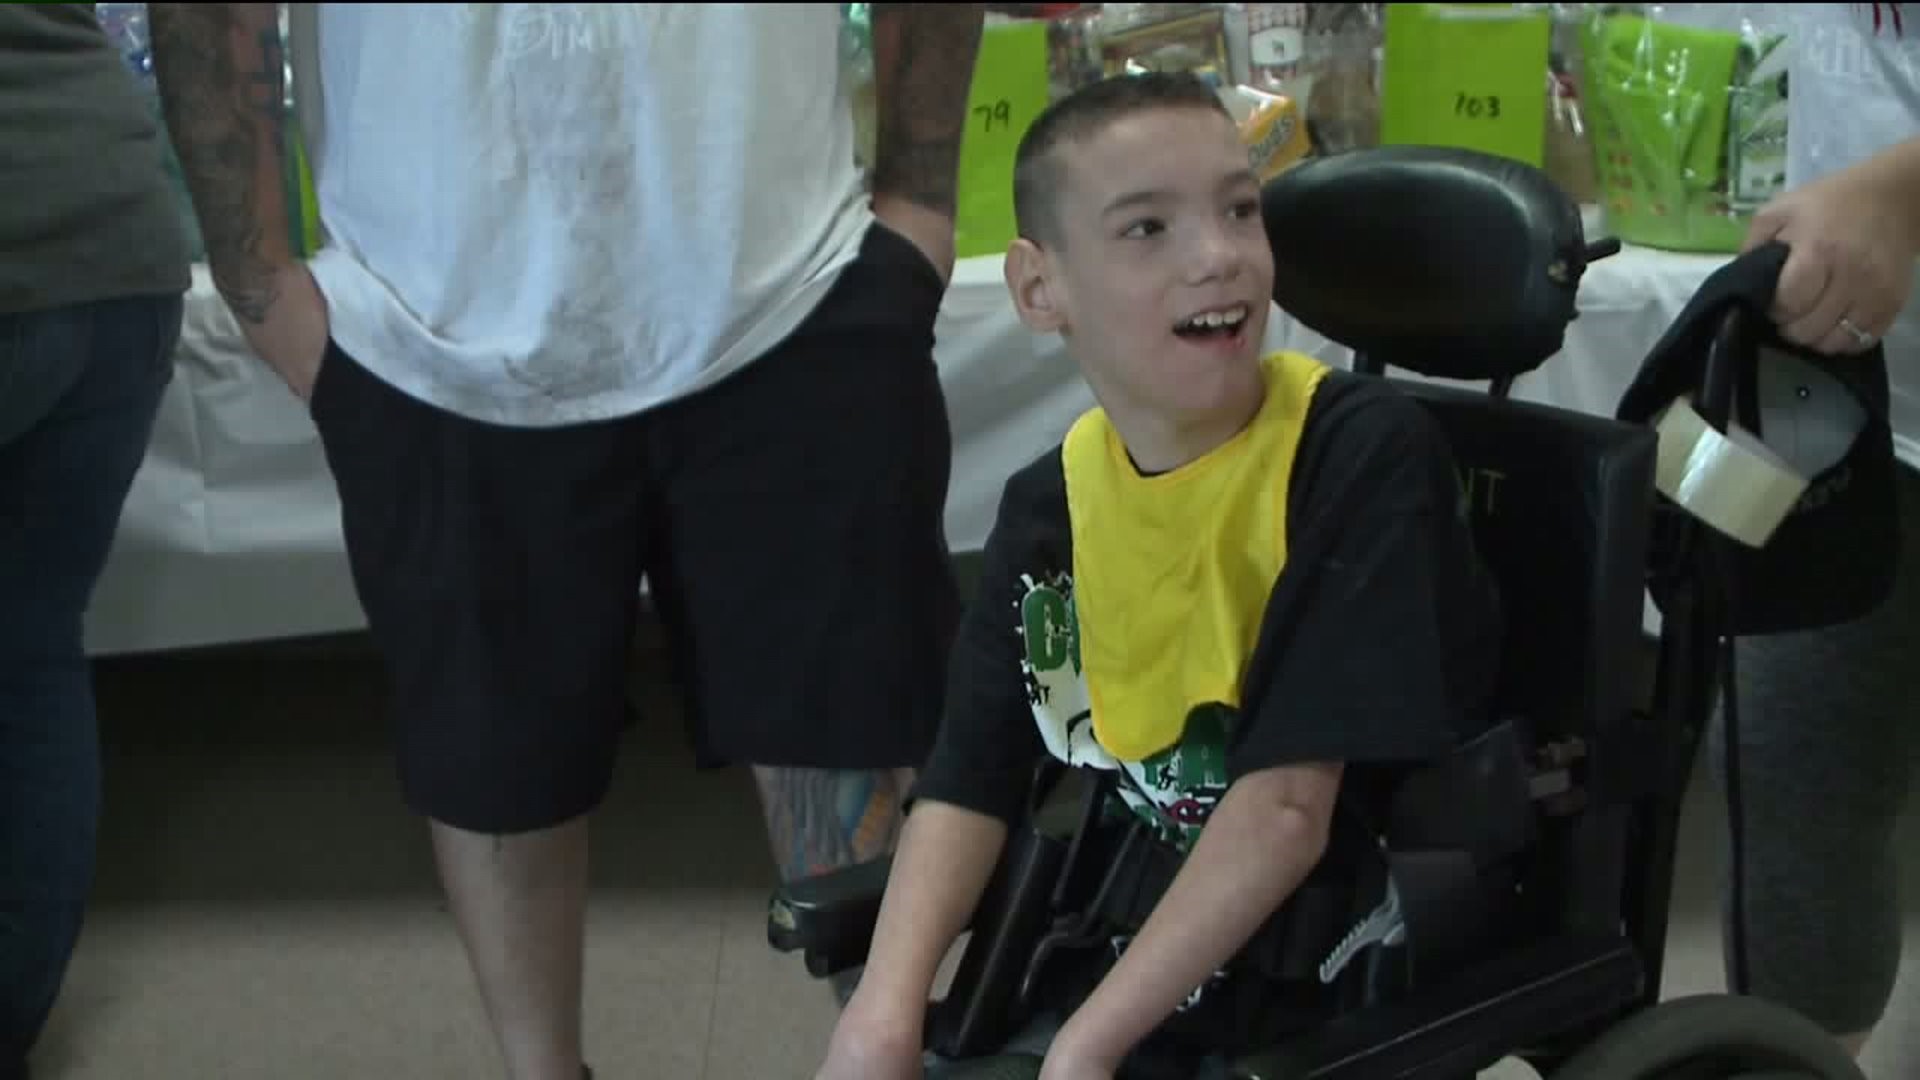 Support for Boy in Need of Handicap Accessible Van